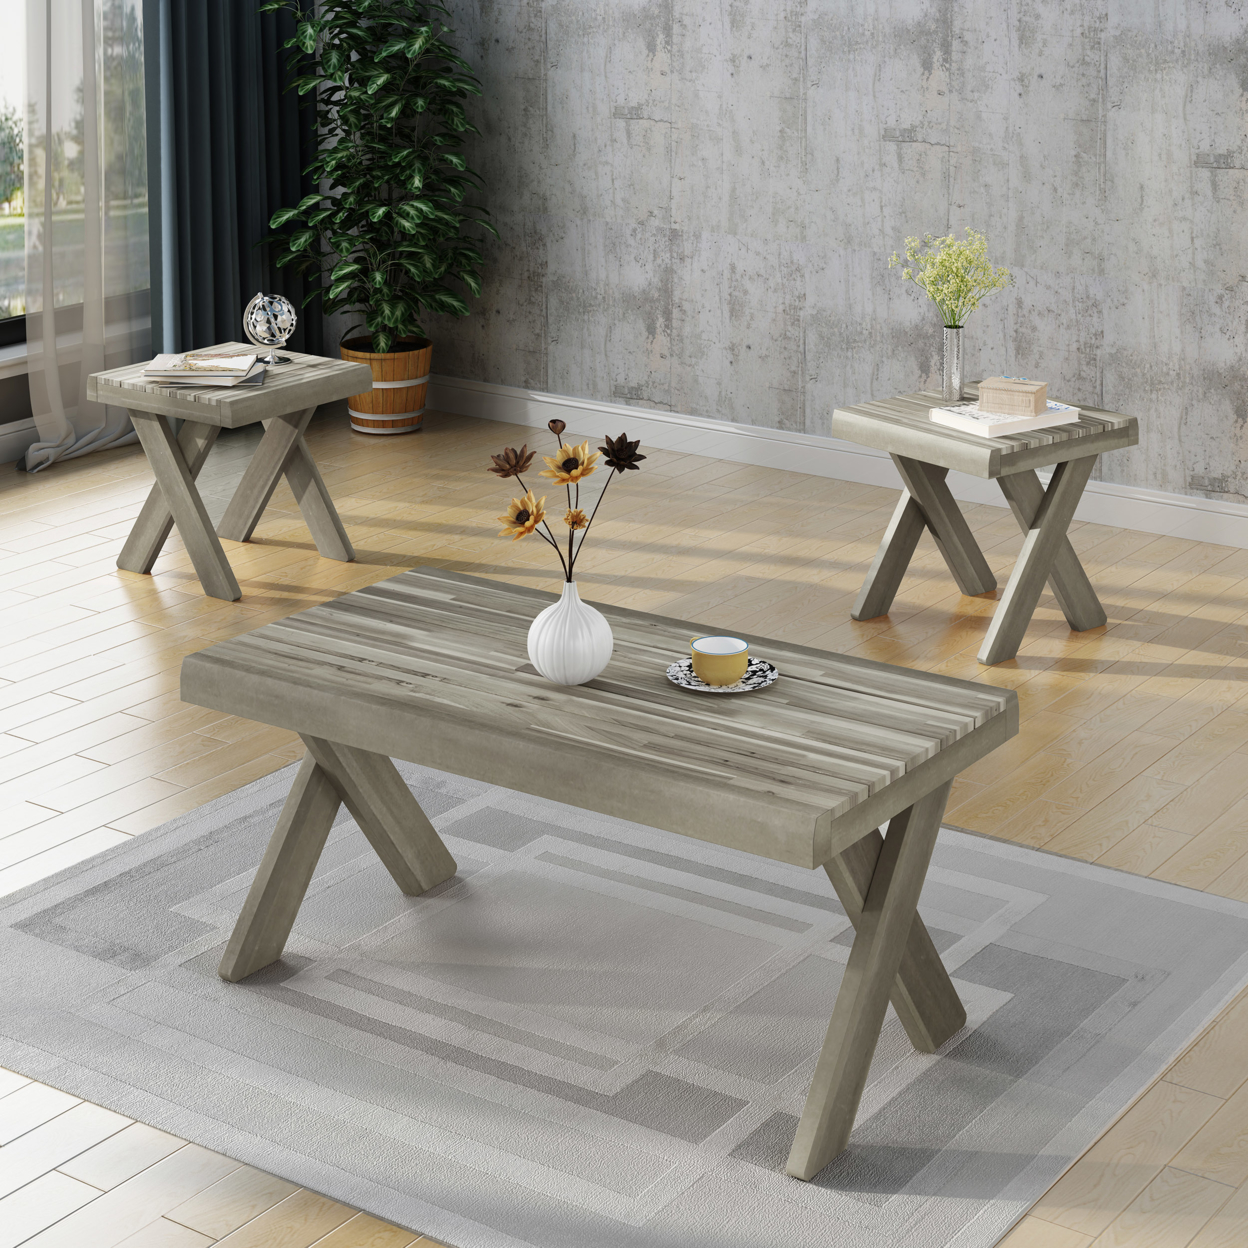 Irene Indoor Farmhouse 3 Piece Acacia Wood Table Set - Light Gray